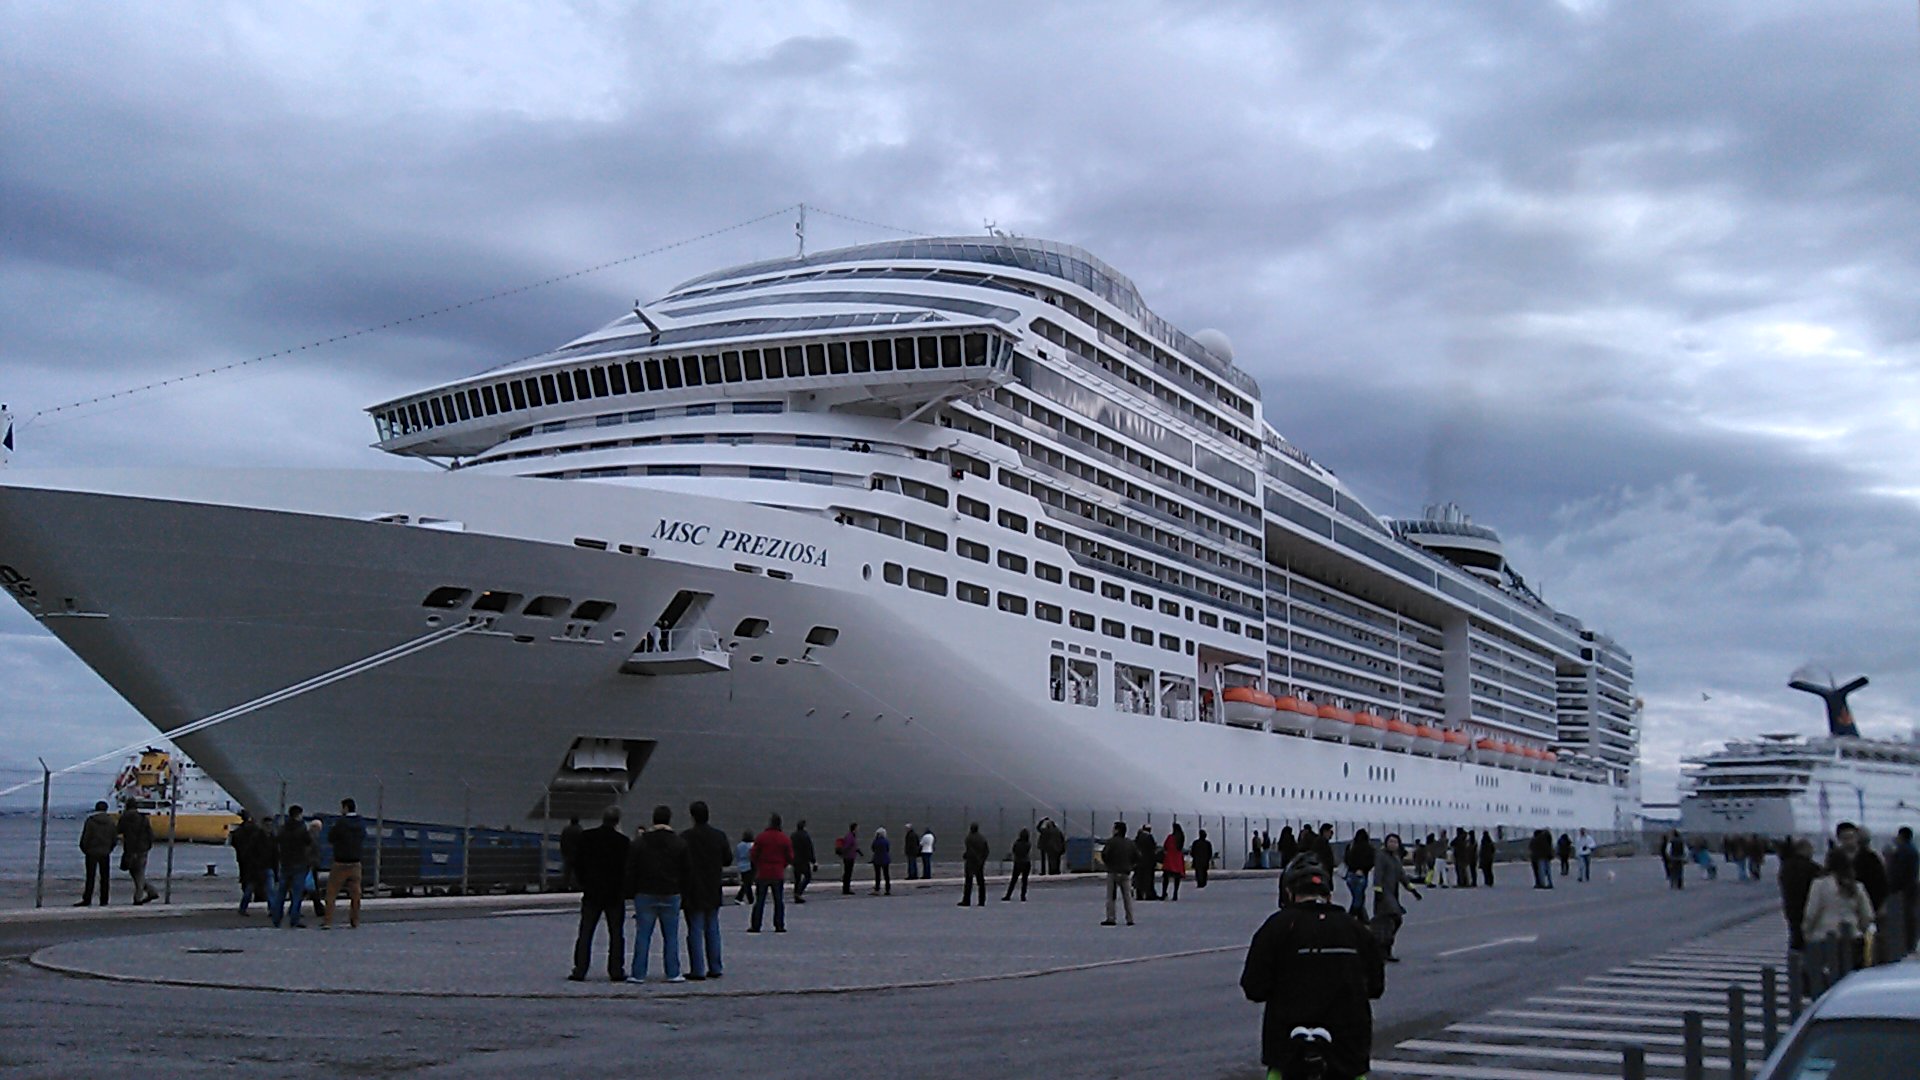 The MSC Prezioza docked in Lisbon, Portugal in March 2013/ (CC via Wikimedia Commons)